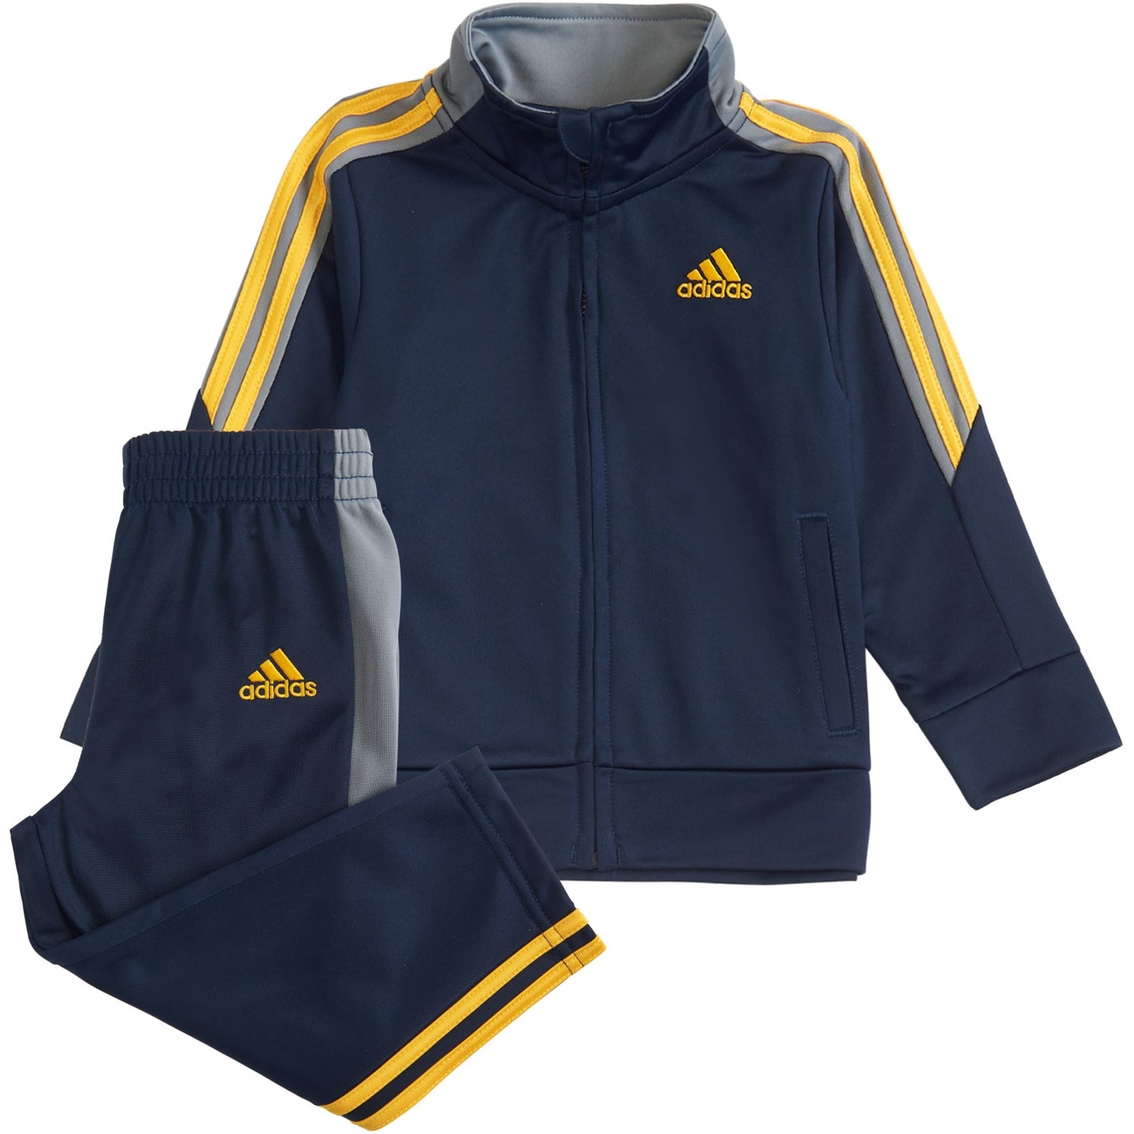 Adidas Infant Boys Tricolor Tricot Set | Baby Boy 0-24 Months ...